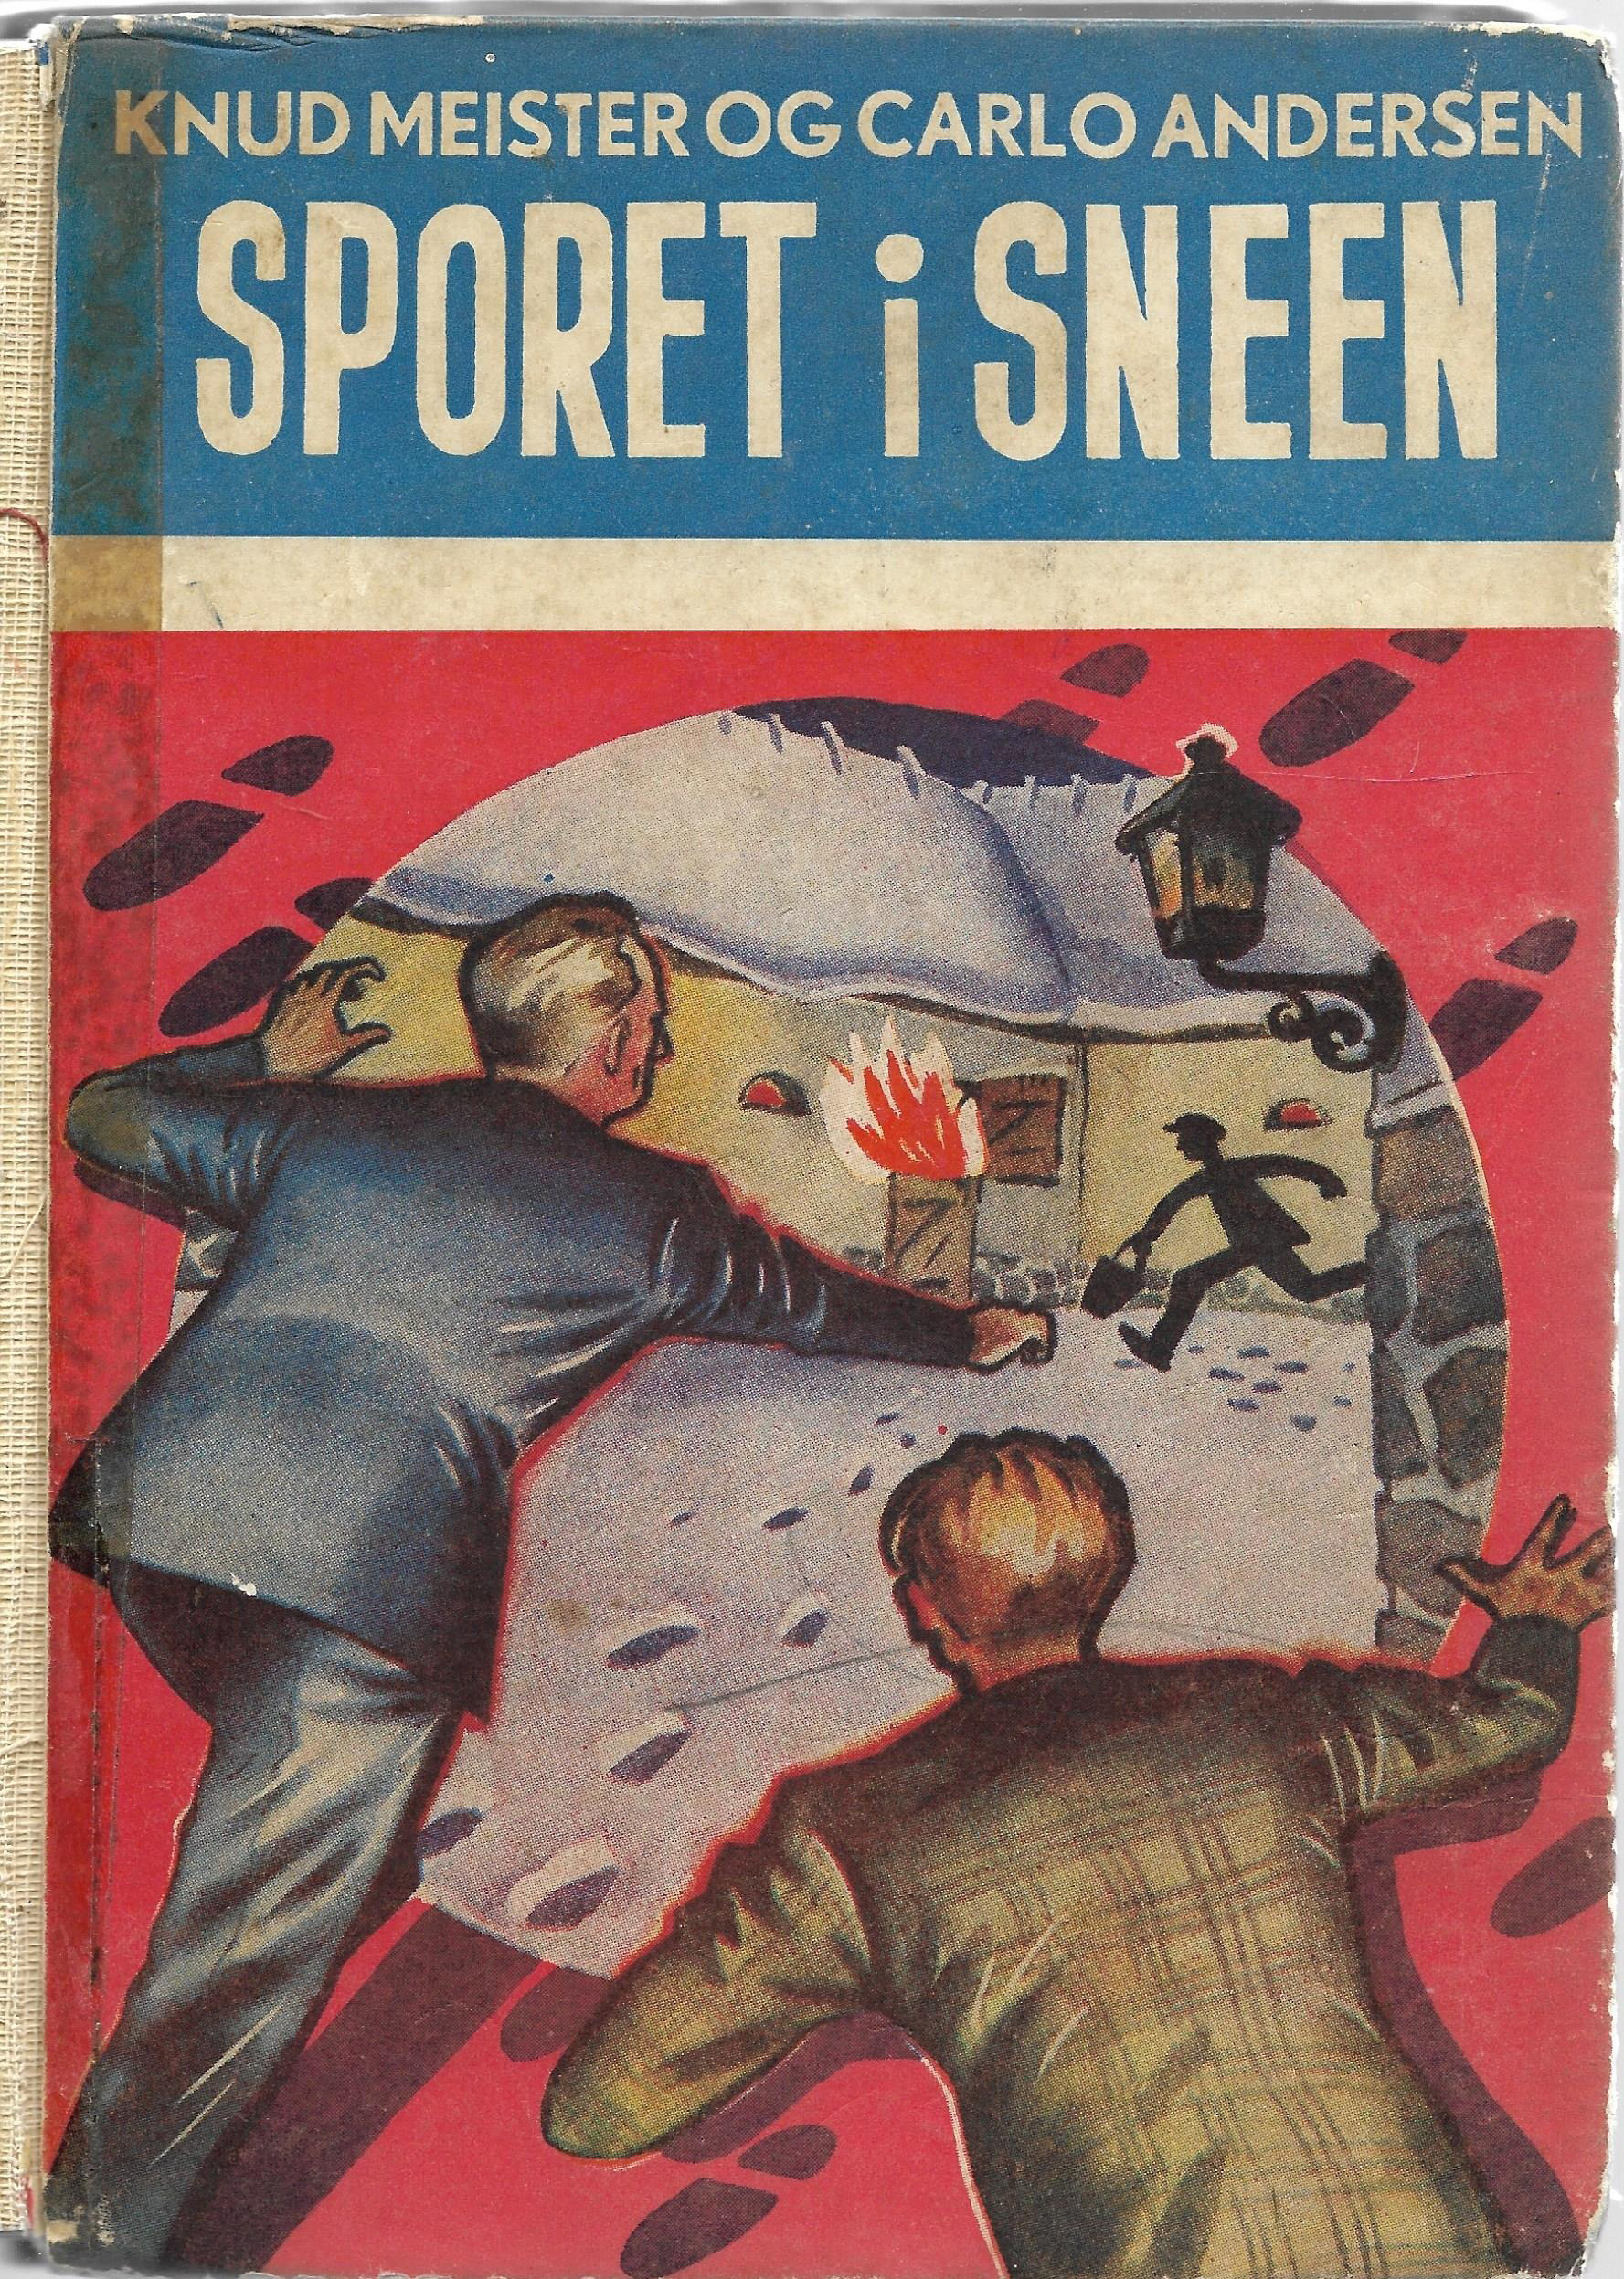 Sporet i sneen - Knud Meister og Carlo Andersen 1950-1